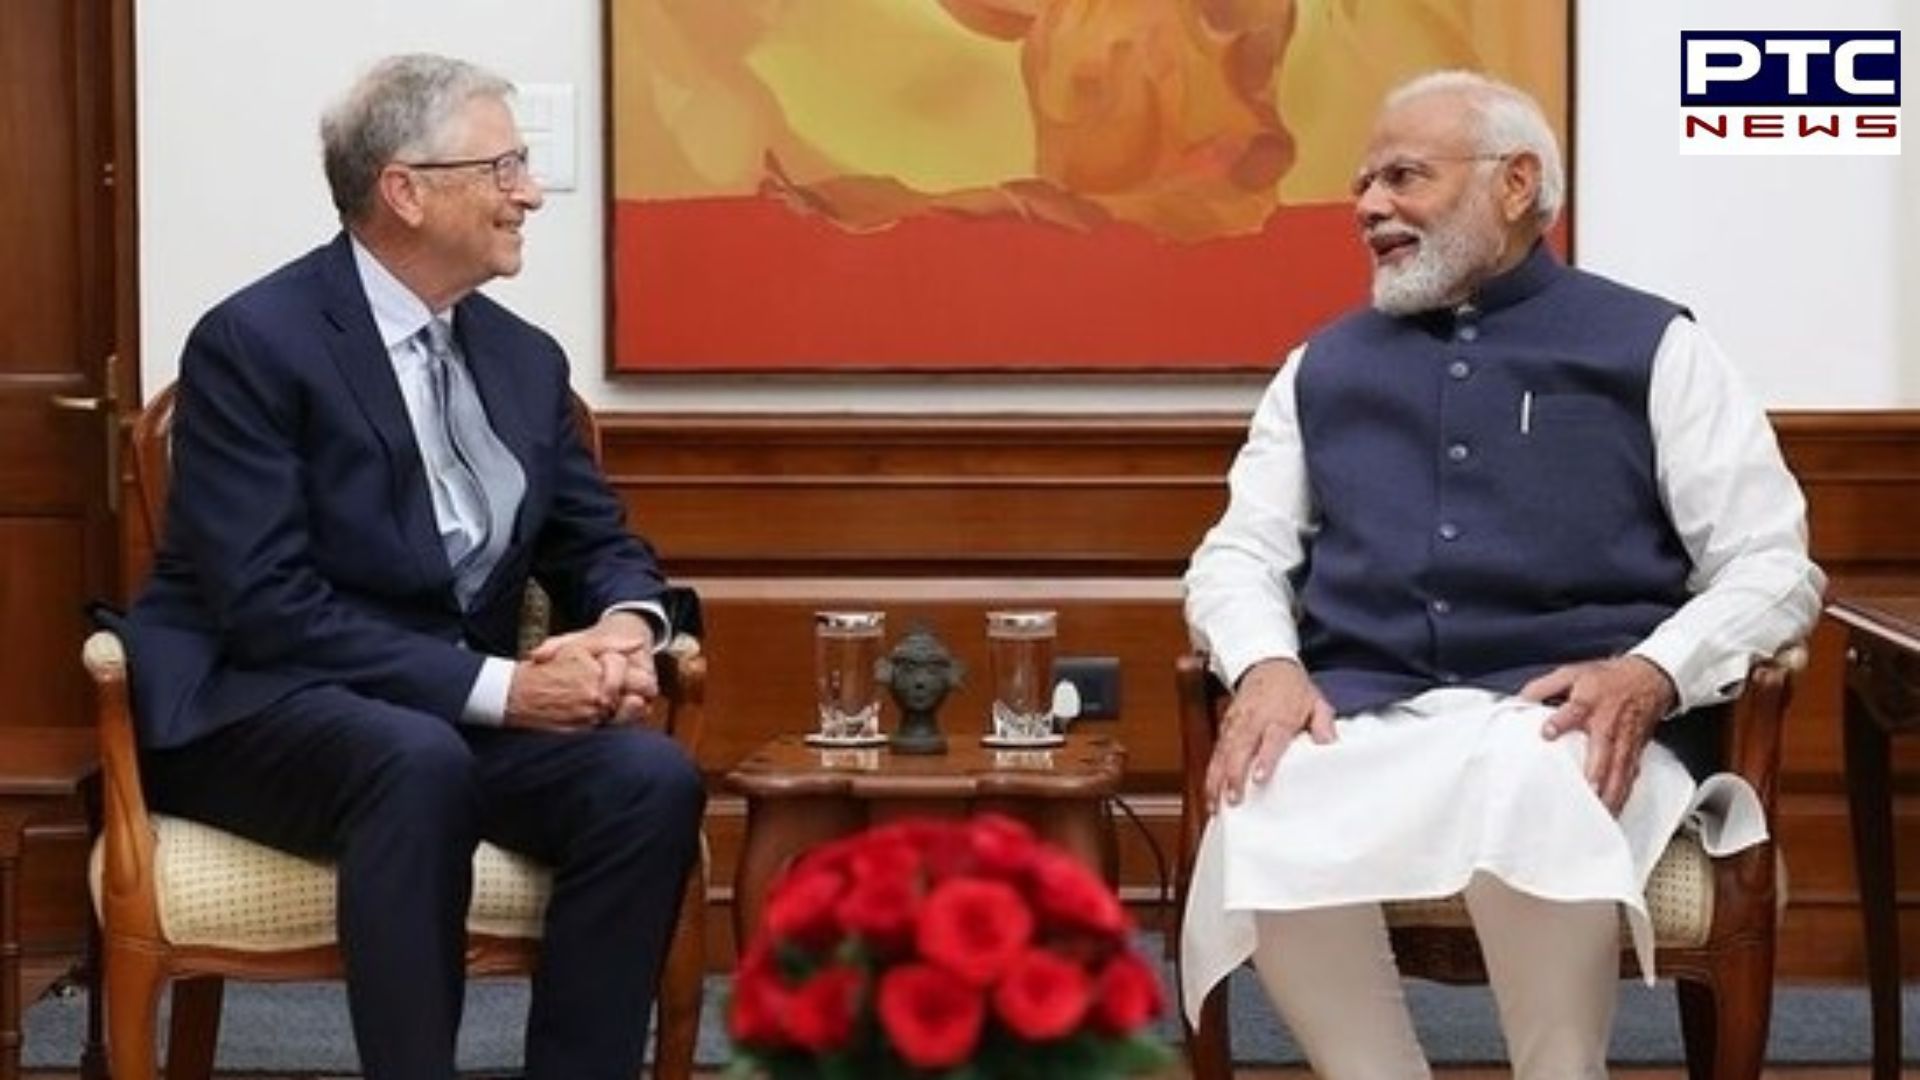 PM Modi Bill Gates Interview: ਪੀਐਮ ਮੋਦੀ ਨੇ ਕਿਹਾ- ਮੈਂ ਟੈਕਨਾਲੋਜੀ ਦਾ ਗੁਲਾਮ ਨਹੀਂ ਹਾਂ, ਮੈਂ ਪਾਣੀ ਦੇ ਵਹਾਅ ਵਾਂਗ ਨਵੀਂ ਤਕਨੀਕ ਲੱਭਦਾ ਹਾਂ